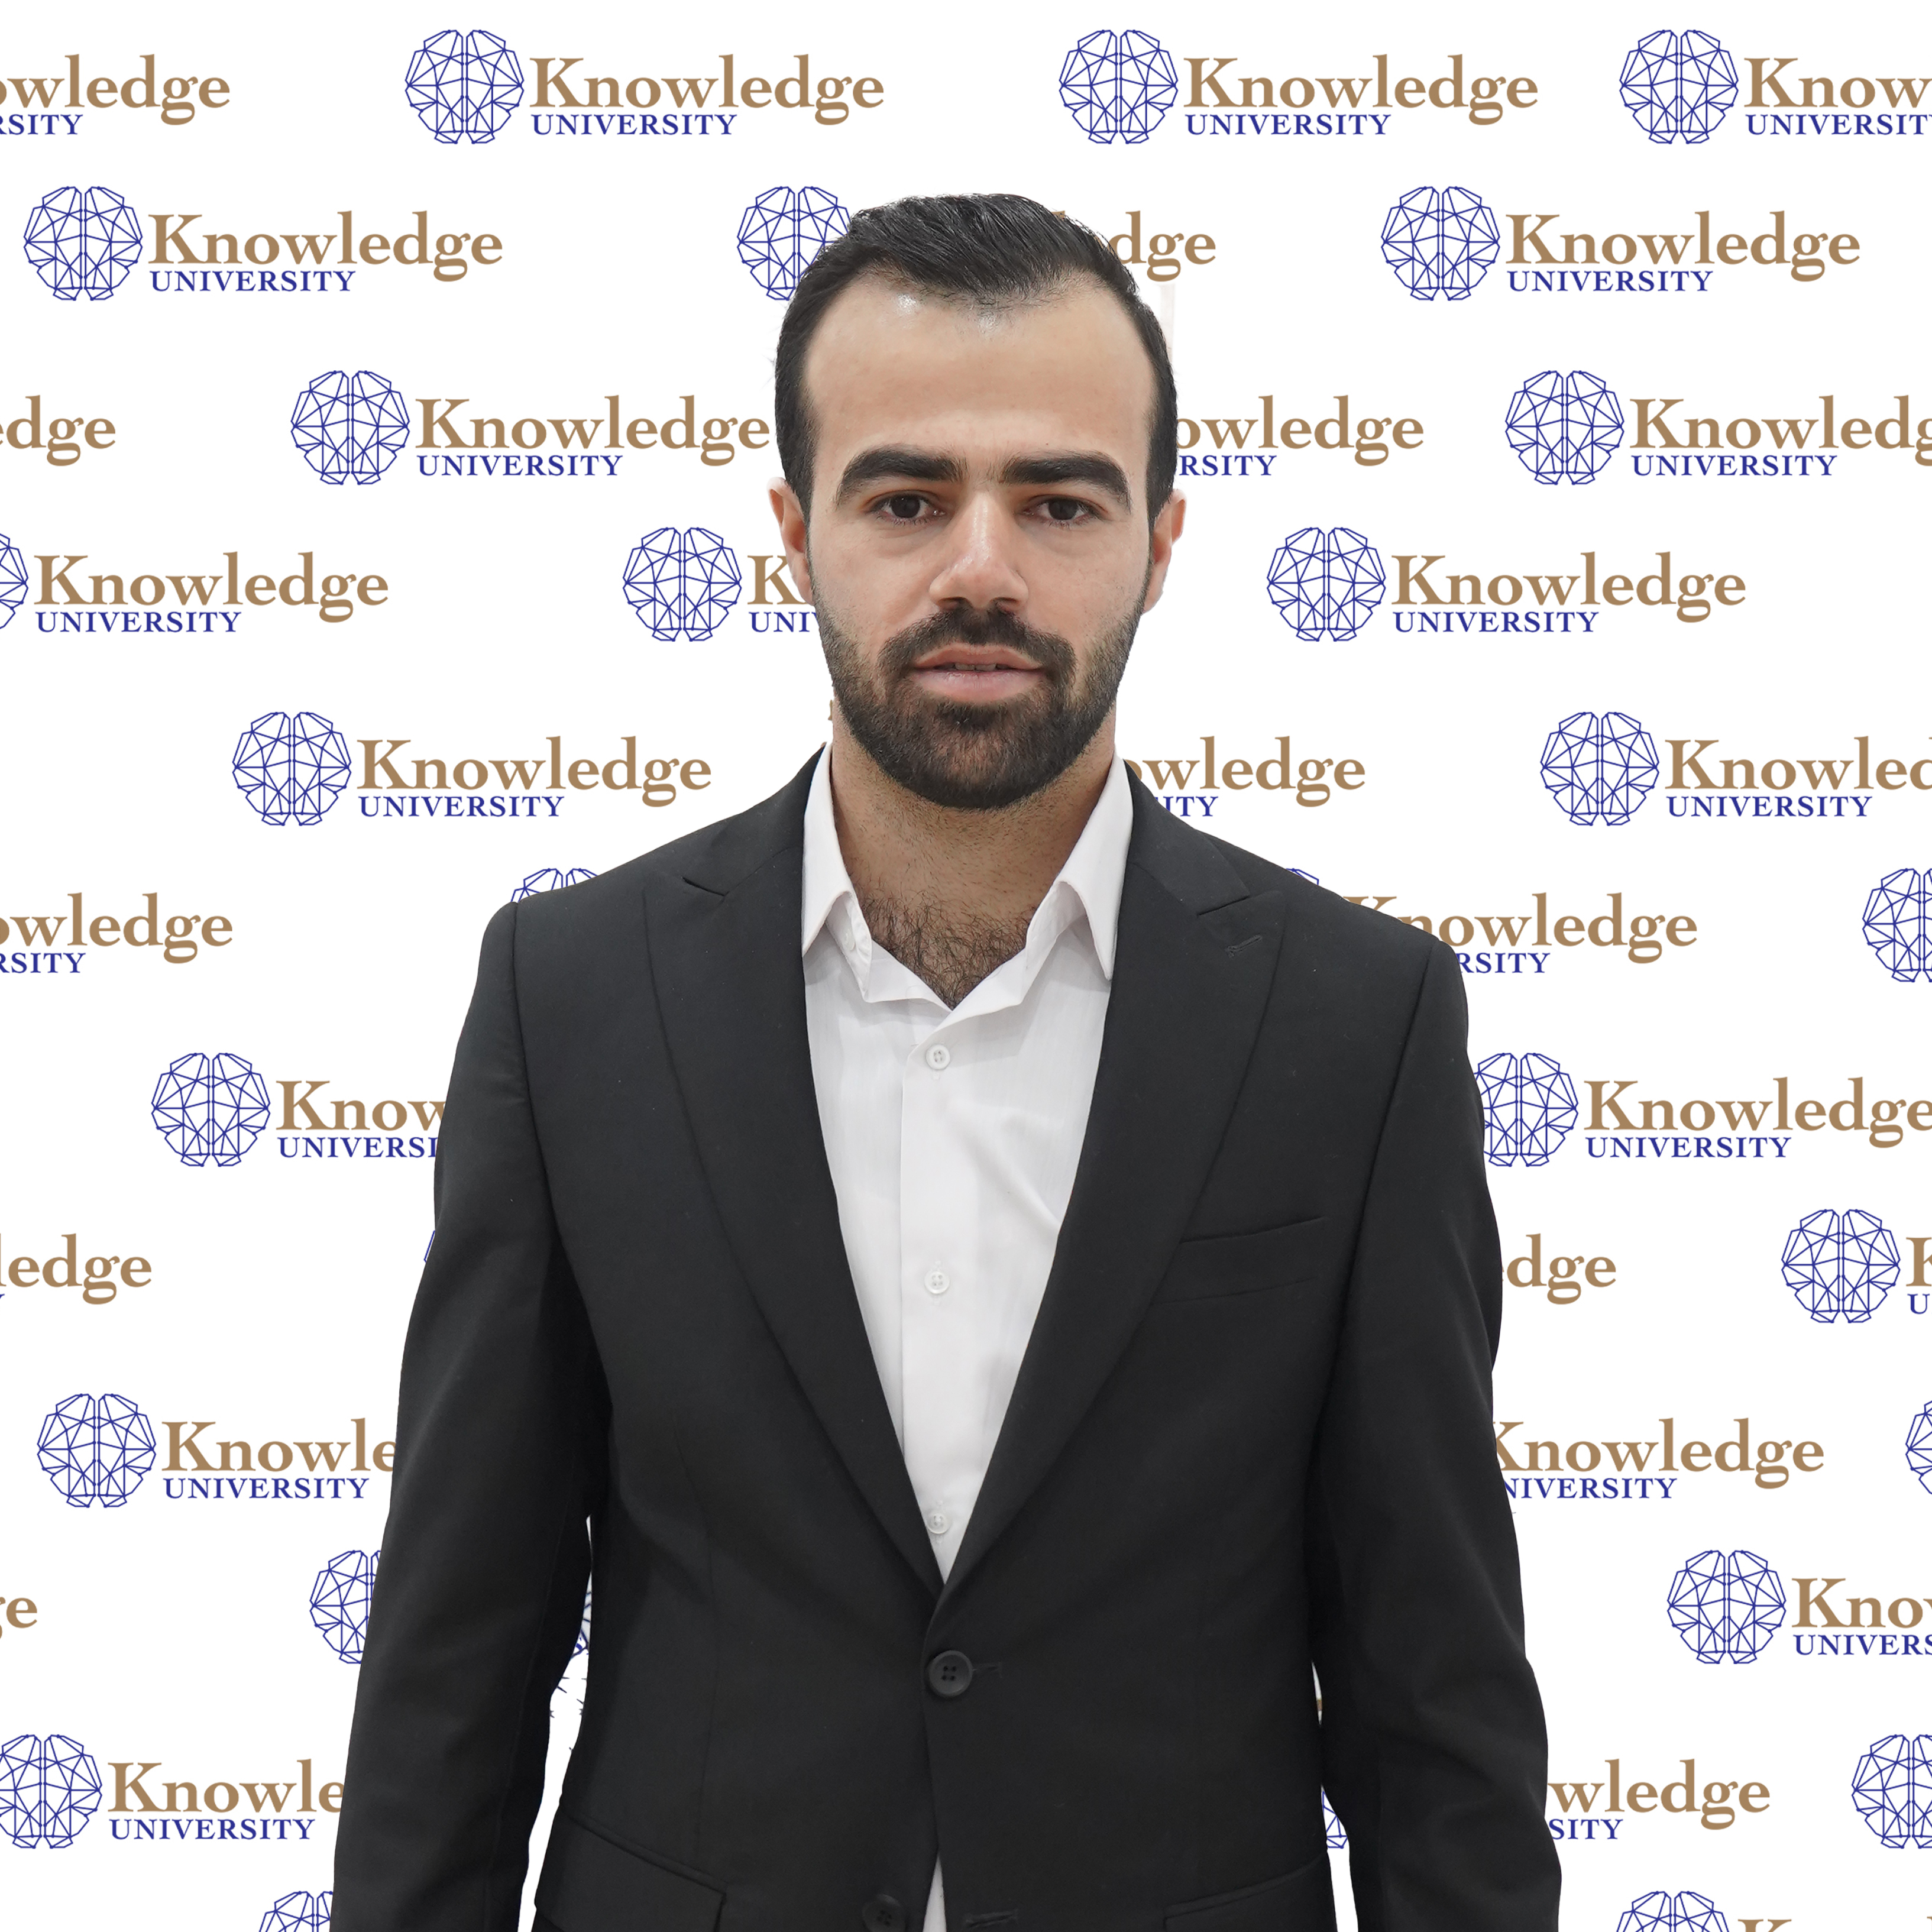 Abdulbasd Hussein Ahmed , Staff at Knowledge